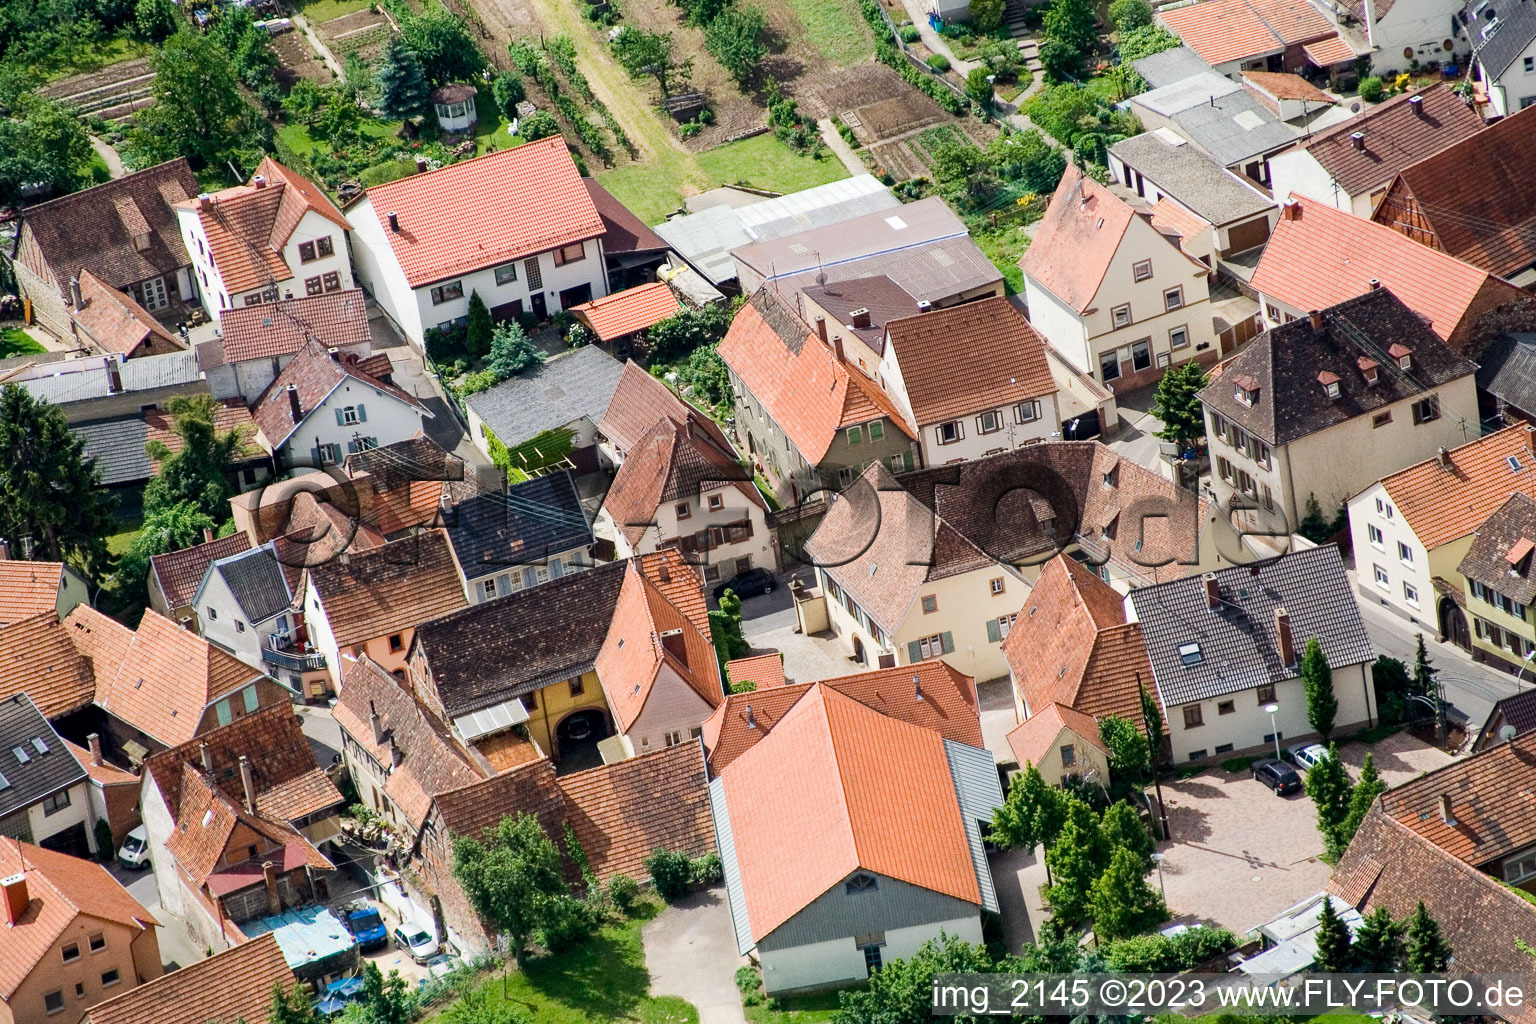 Drone image of District Arzheim in Landau in der Pfalz in the state Rhineland-Palatinate, Germany